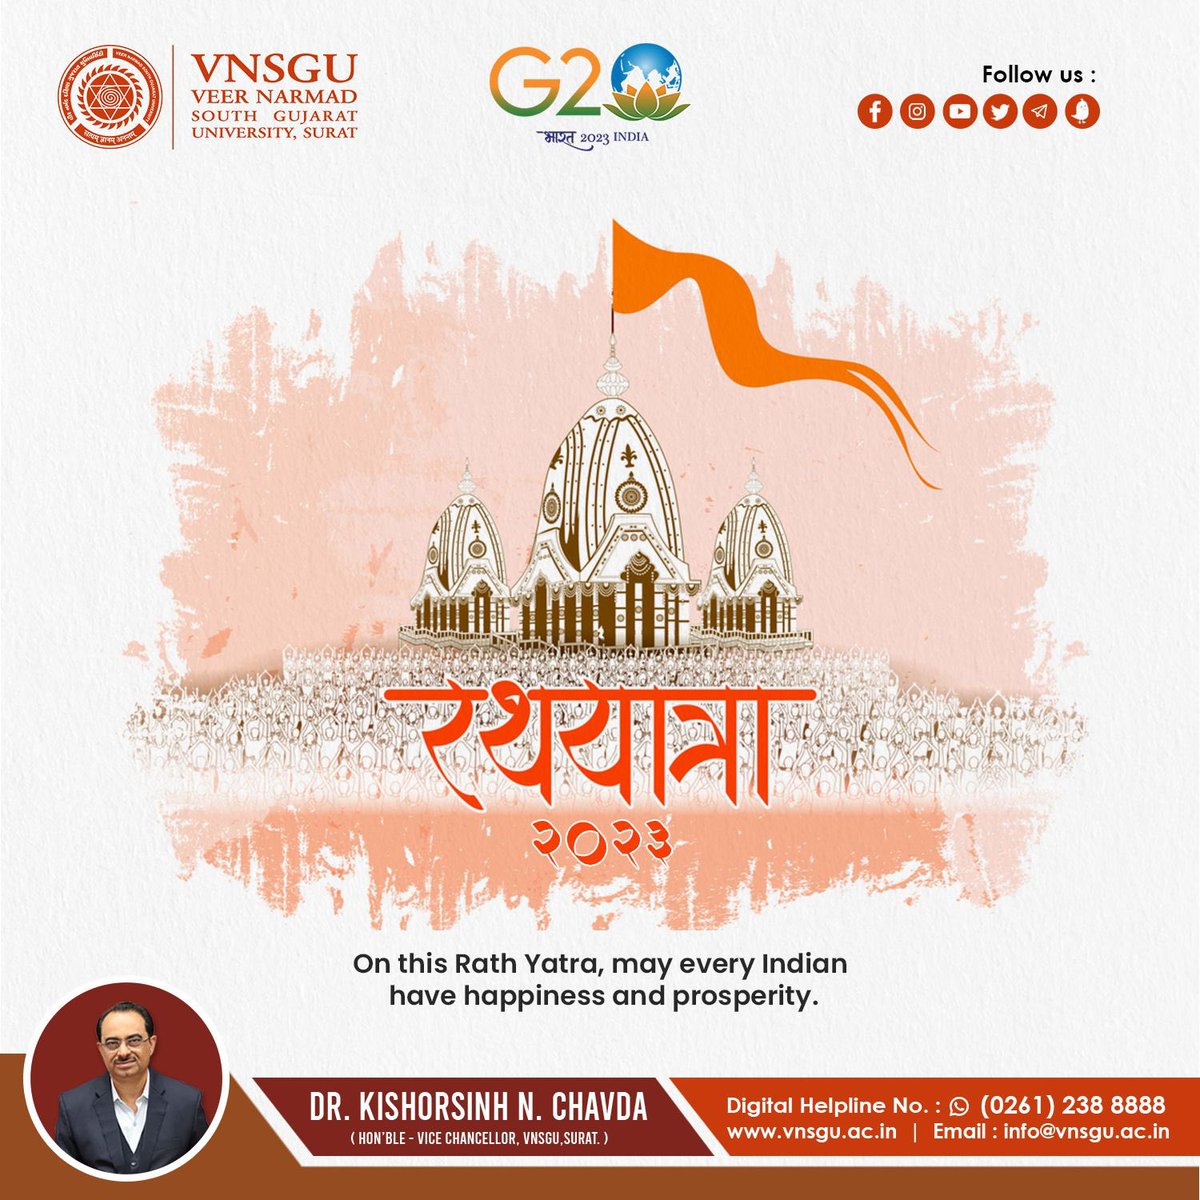 Happy Rath Yatra! Let's celebrate the divine journey of Lord Jagannath together.

.
.
.
.
#vnsgu #university #southgujarat #study #career #art #science #surat #courses #colleges #veer #veernarmad #sports #universityconnect